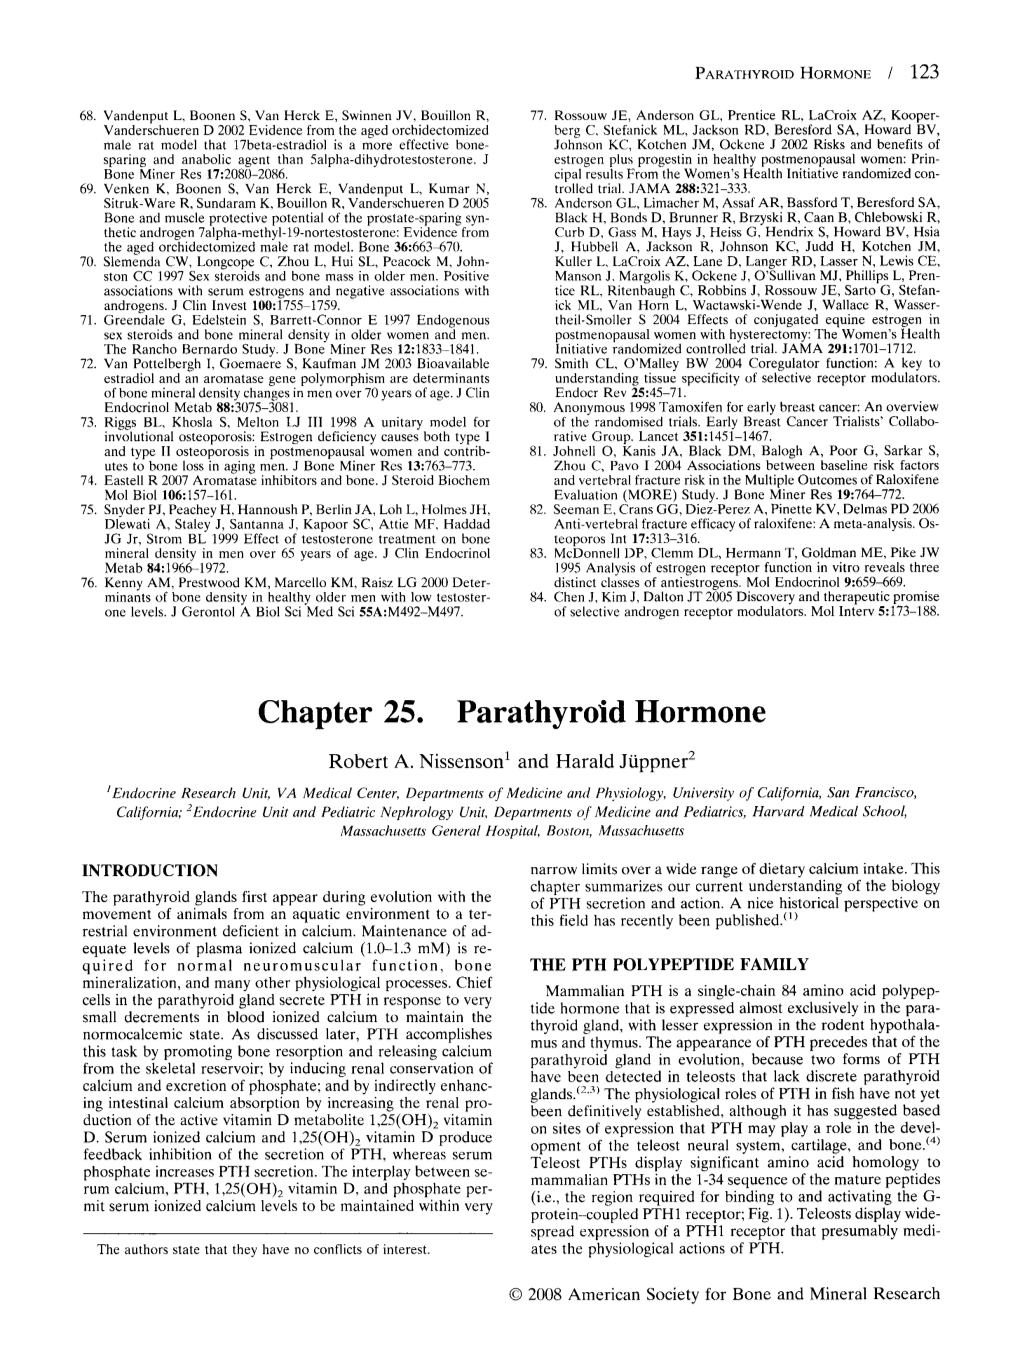 Chapter 25. Parathyroid Hormone